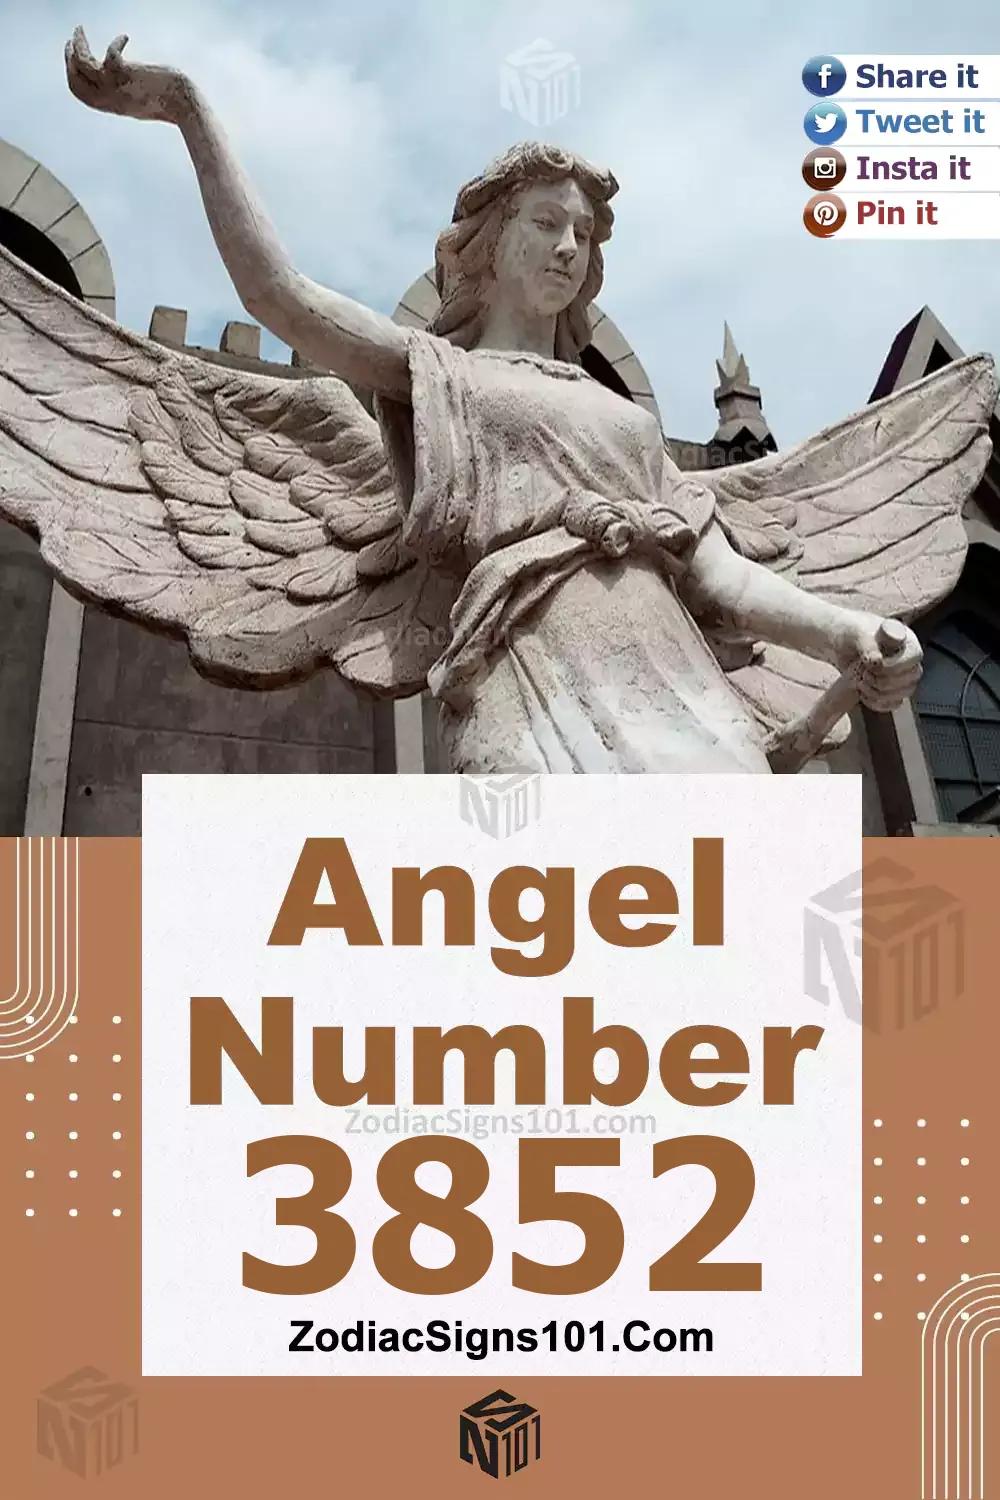 3852-Angel-Number-Meaning.jpg